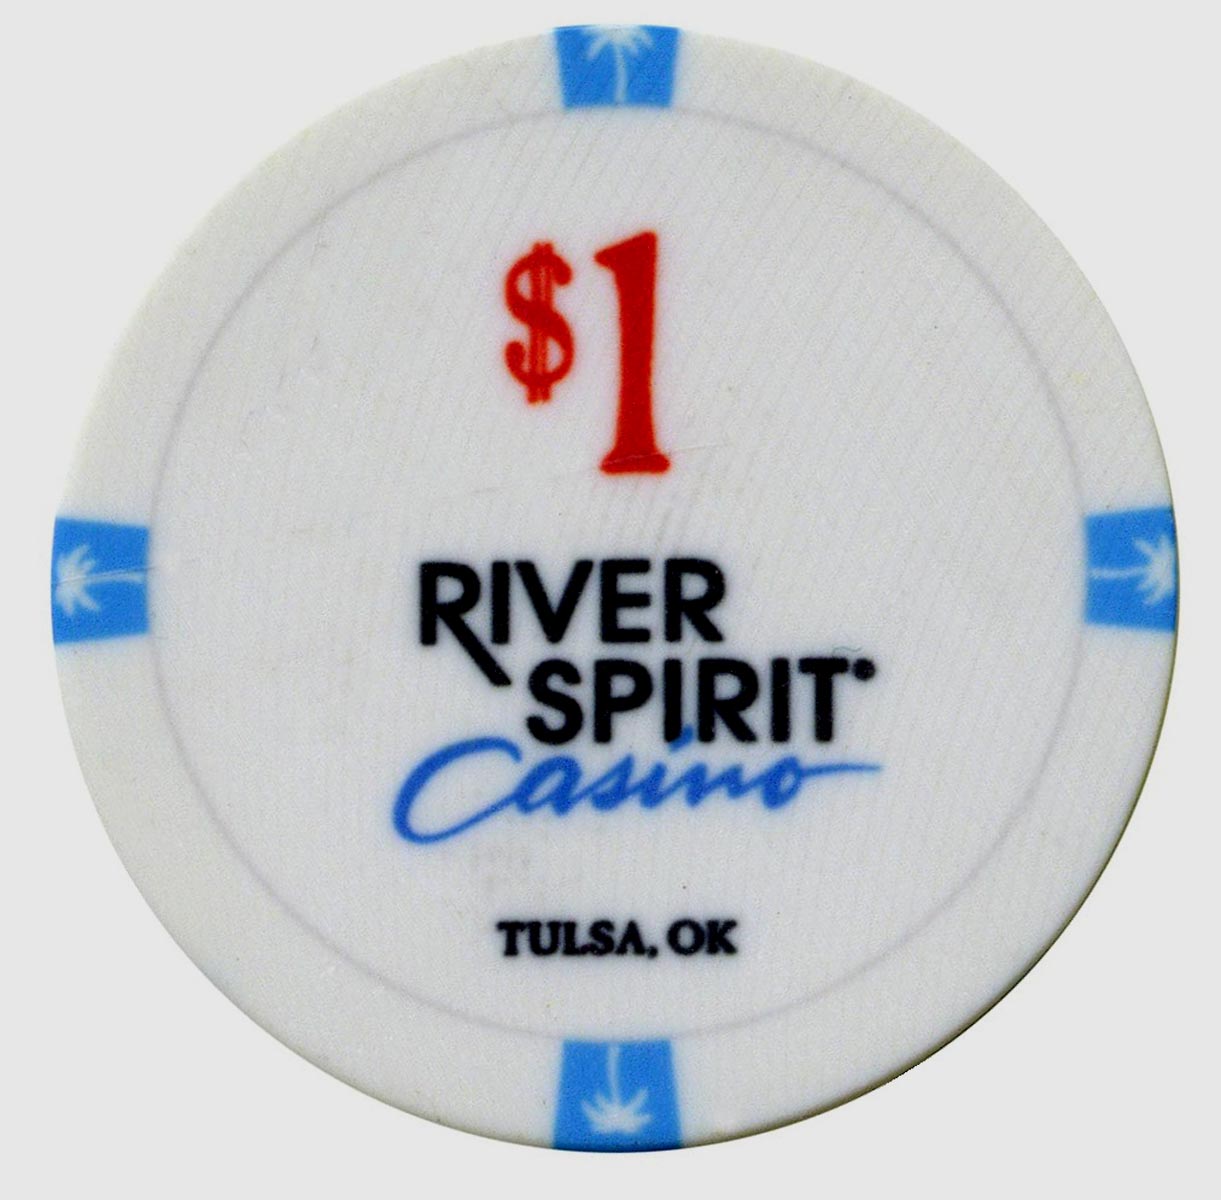 river spirit casino in tulsa oklahoma